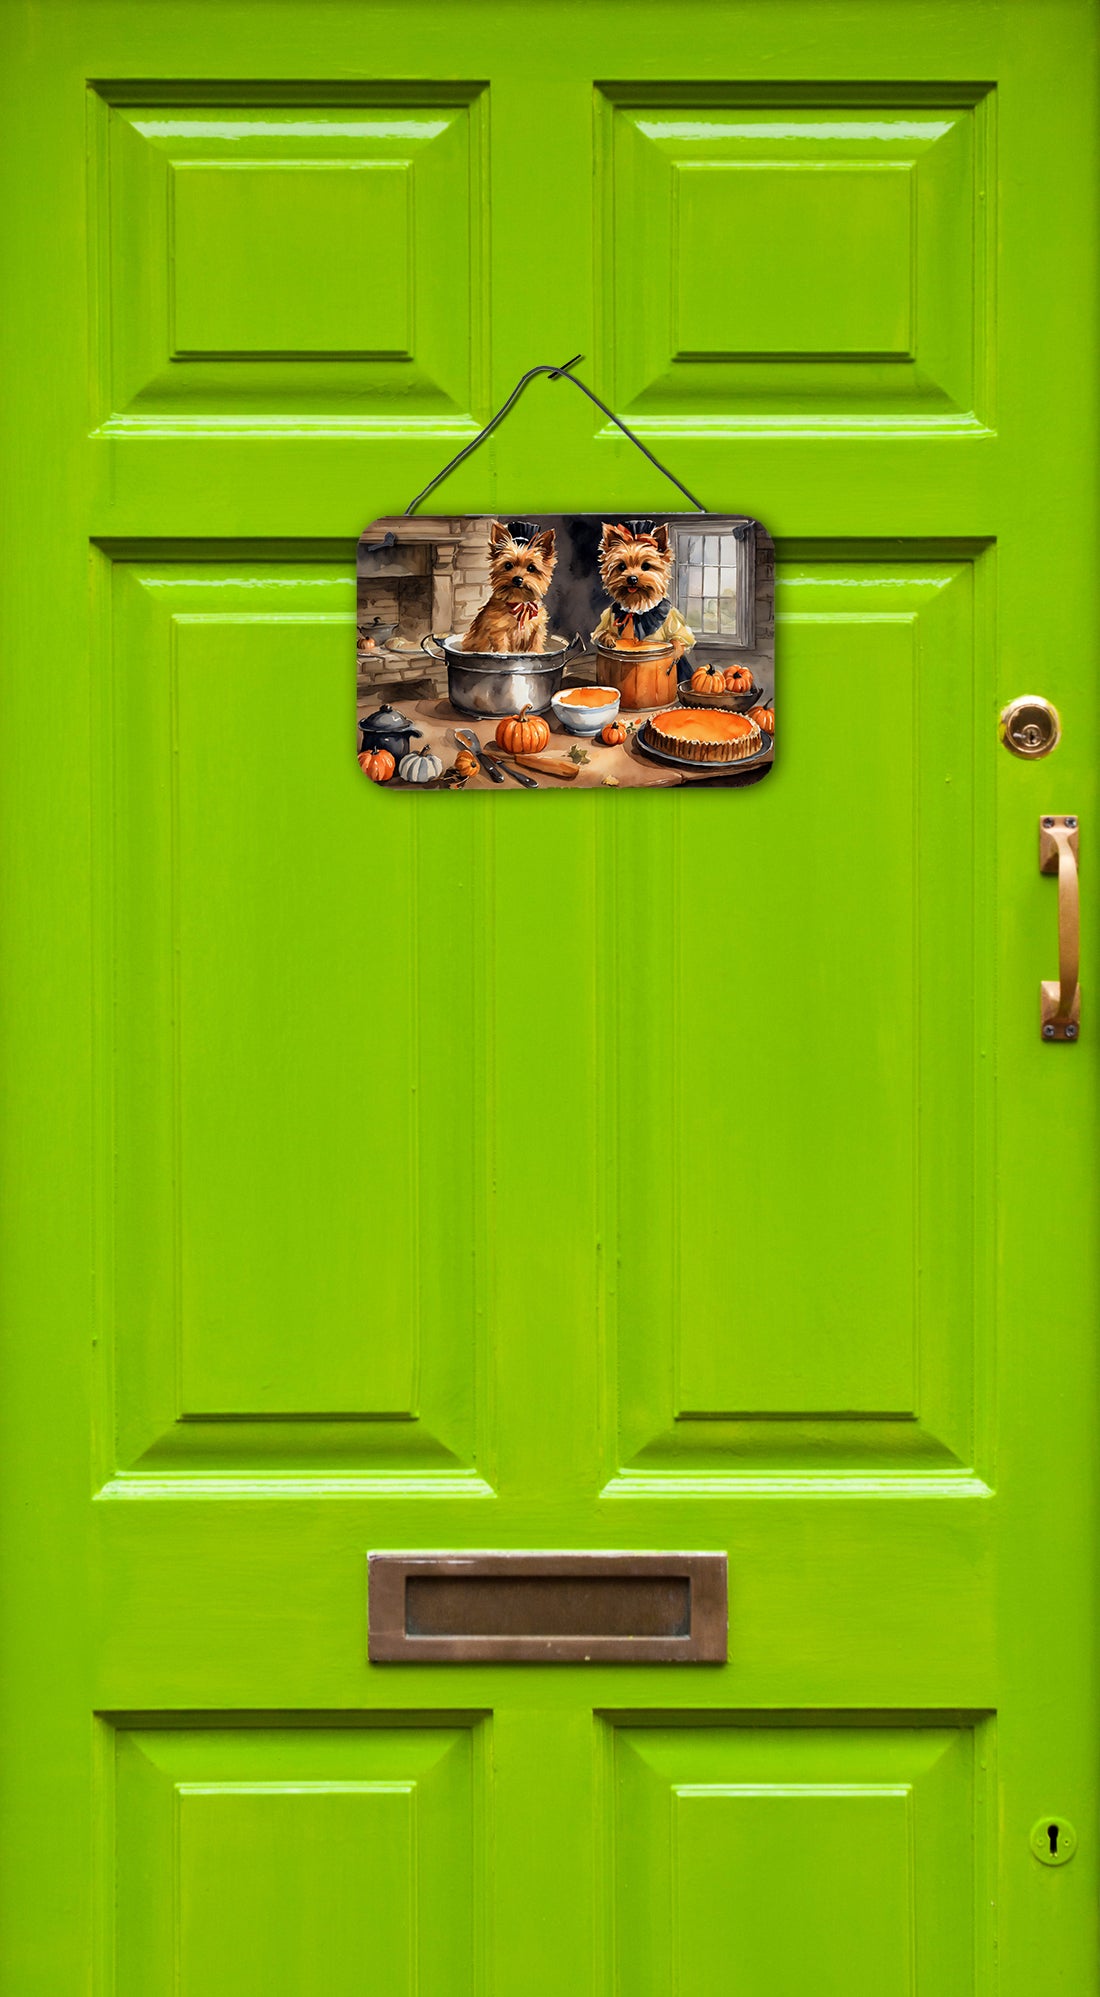 Buy this Norwich Terrier Fall Kitchen Pumpkins Wall or Door Hanging Prints